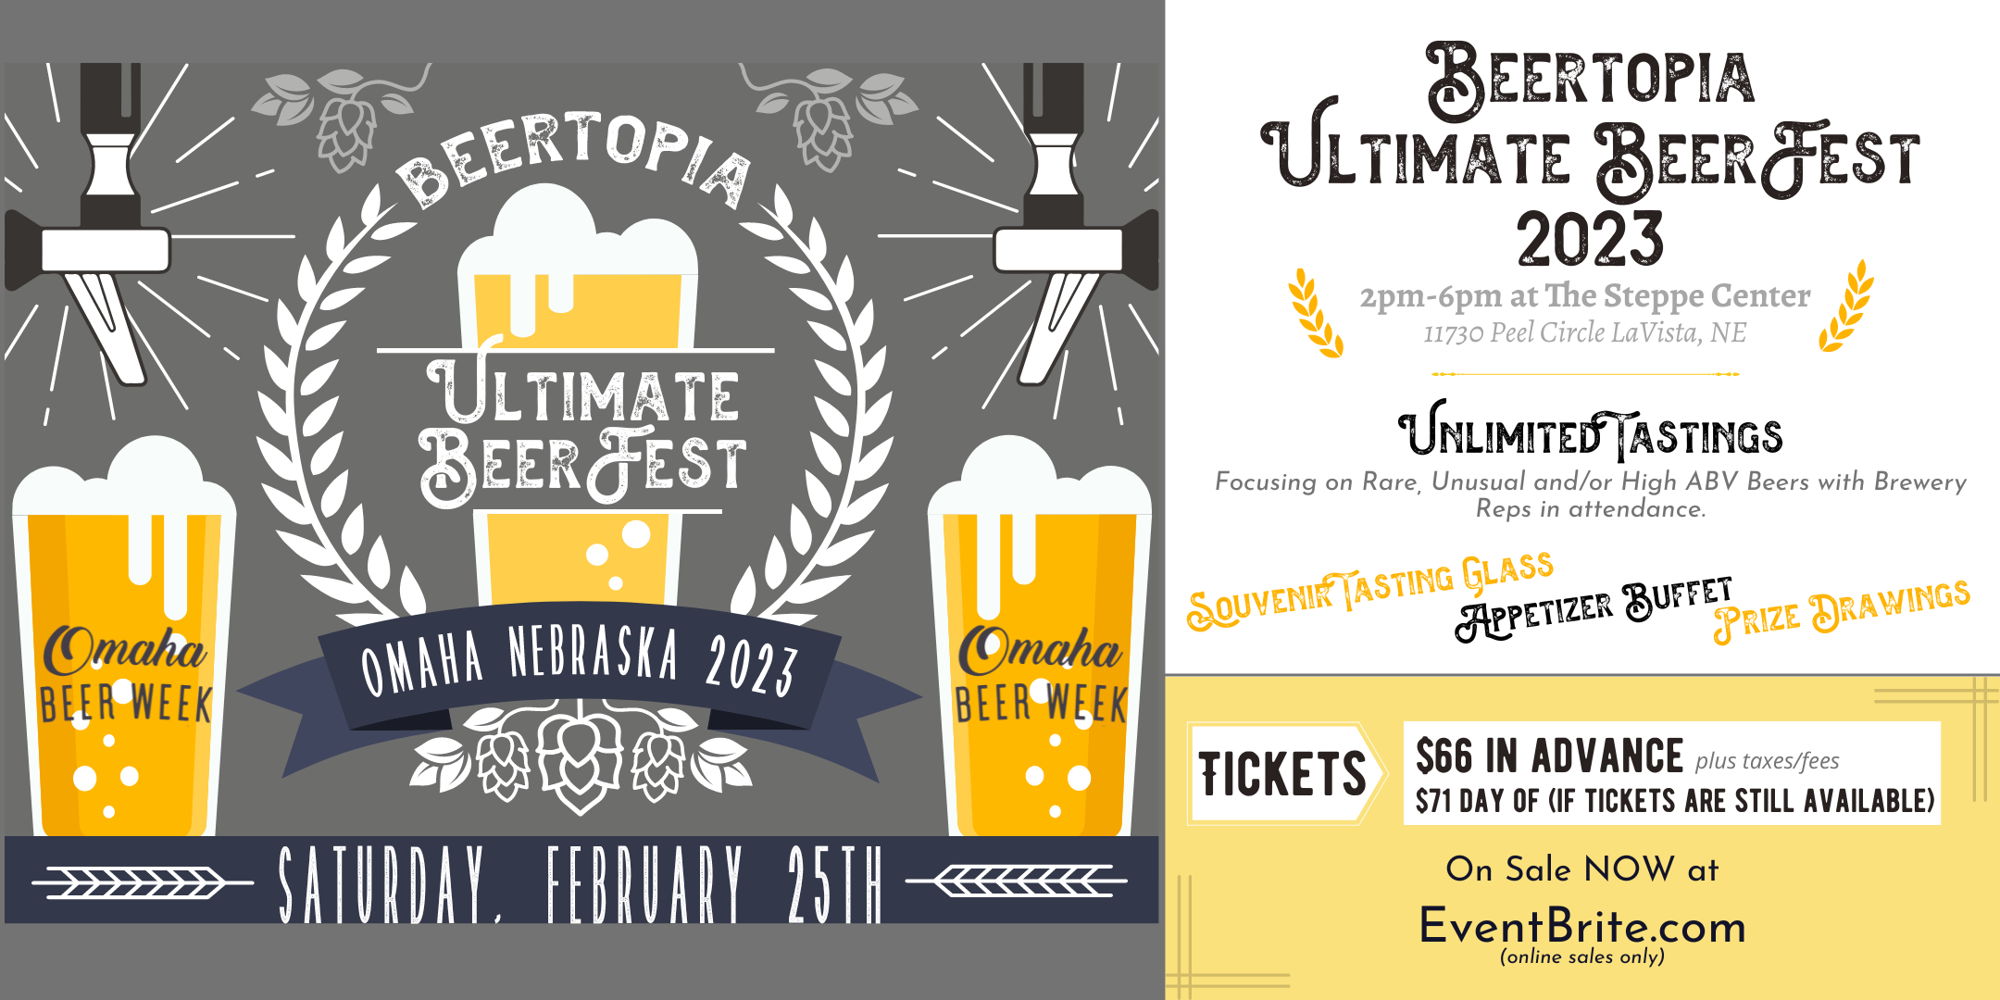 Beertopia Ultimate Beerfest 2023 promotional image